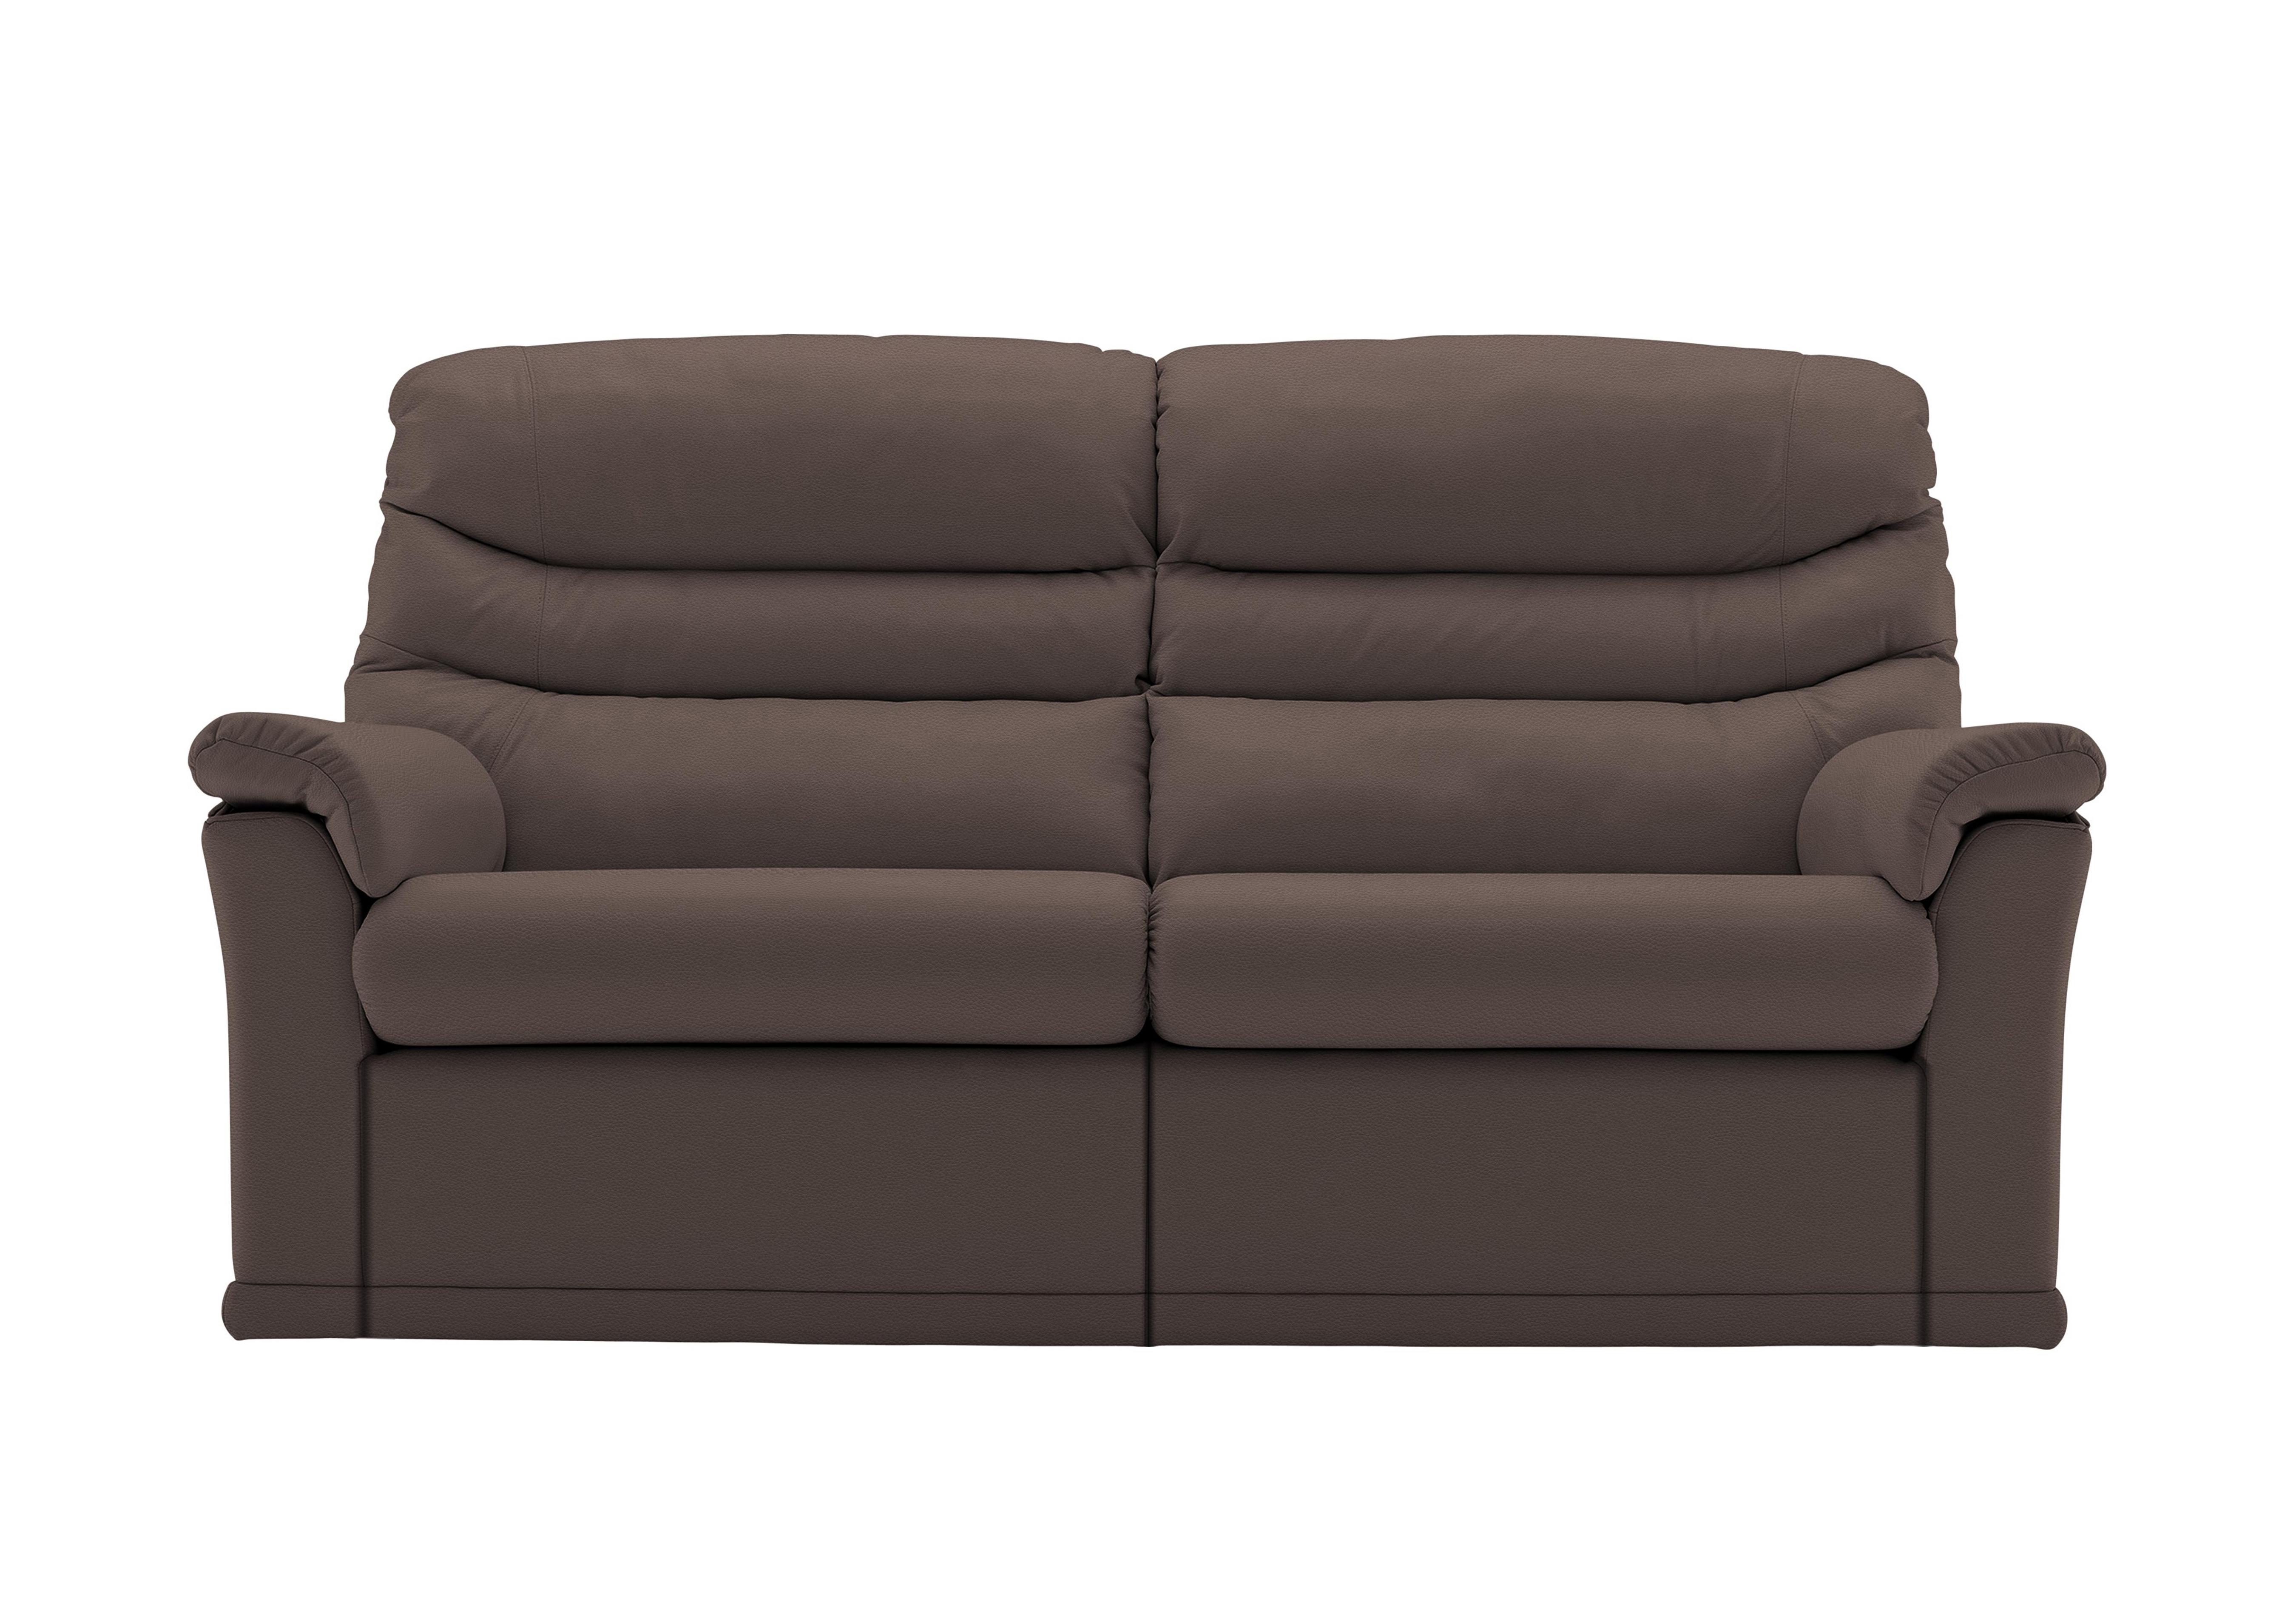 Malvern 2 Cushion 3 Seater Leather Sofa in H003 Oxford Chocolate on Furniture Village